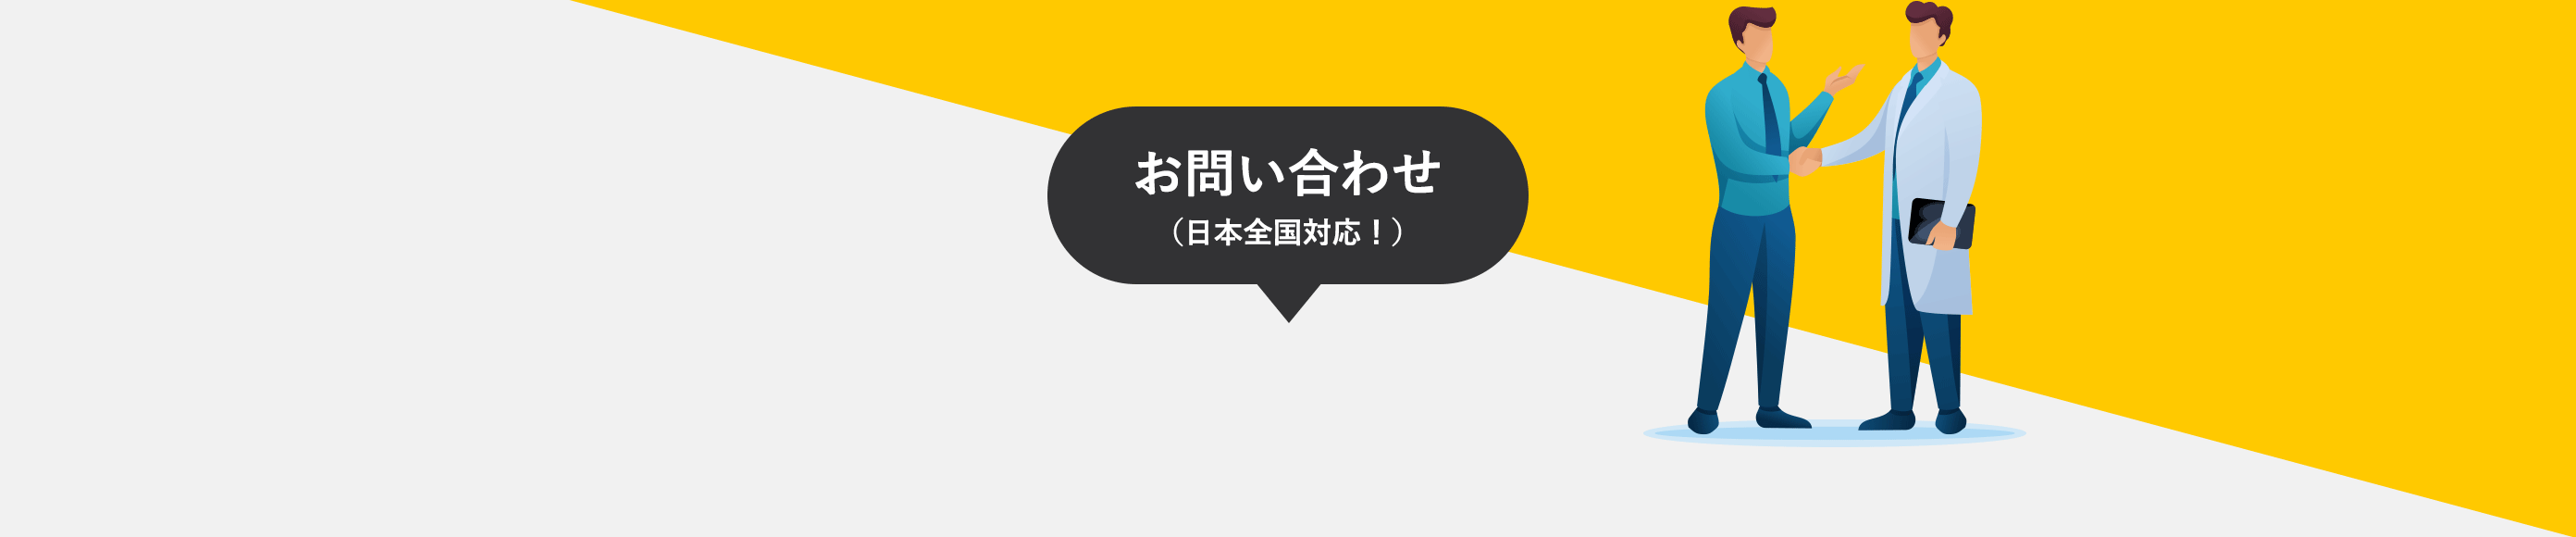 Contact お問い合わせ（日本全国対応！）